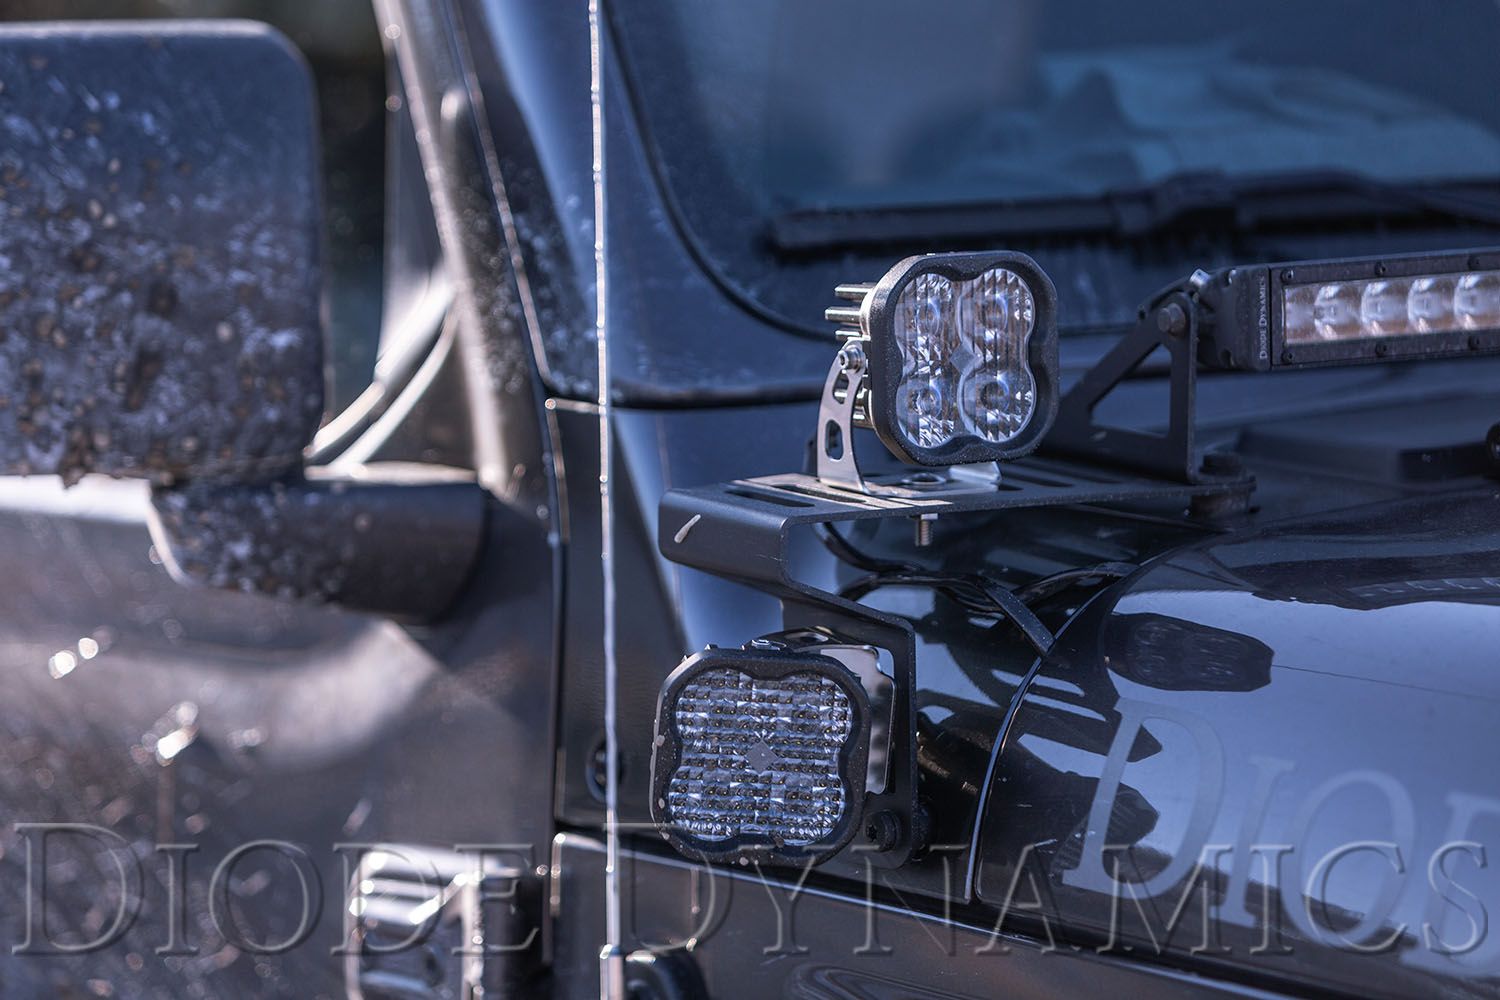 2018-2023 Jeep JL Wrangler Cowl Mount LED Brackets